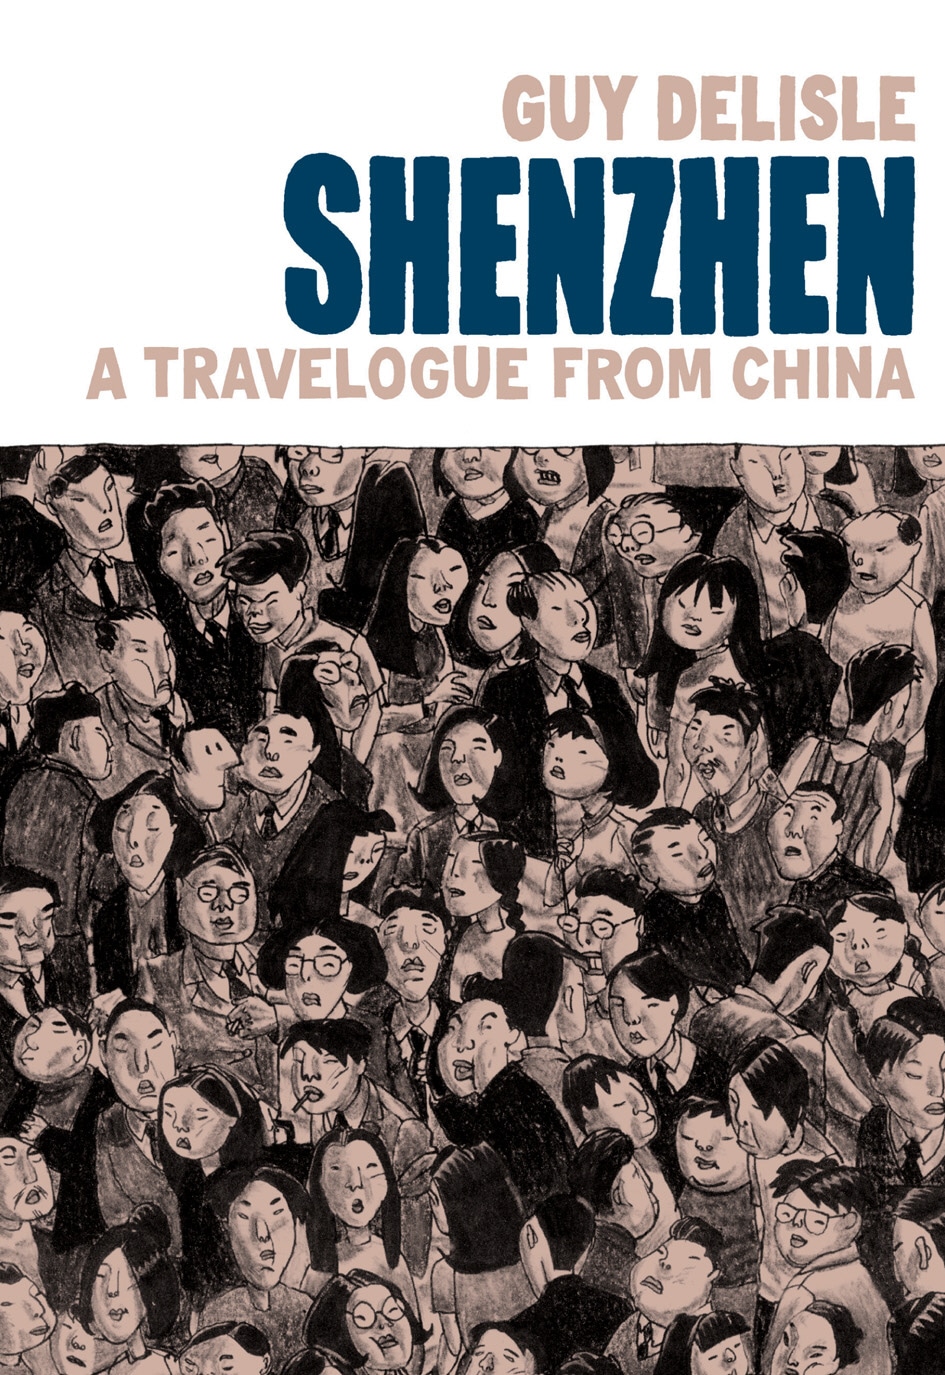 Book “Shenzhen” by Guy Delisle — February 7, 2019